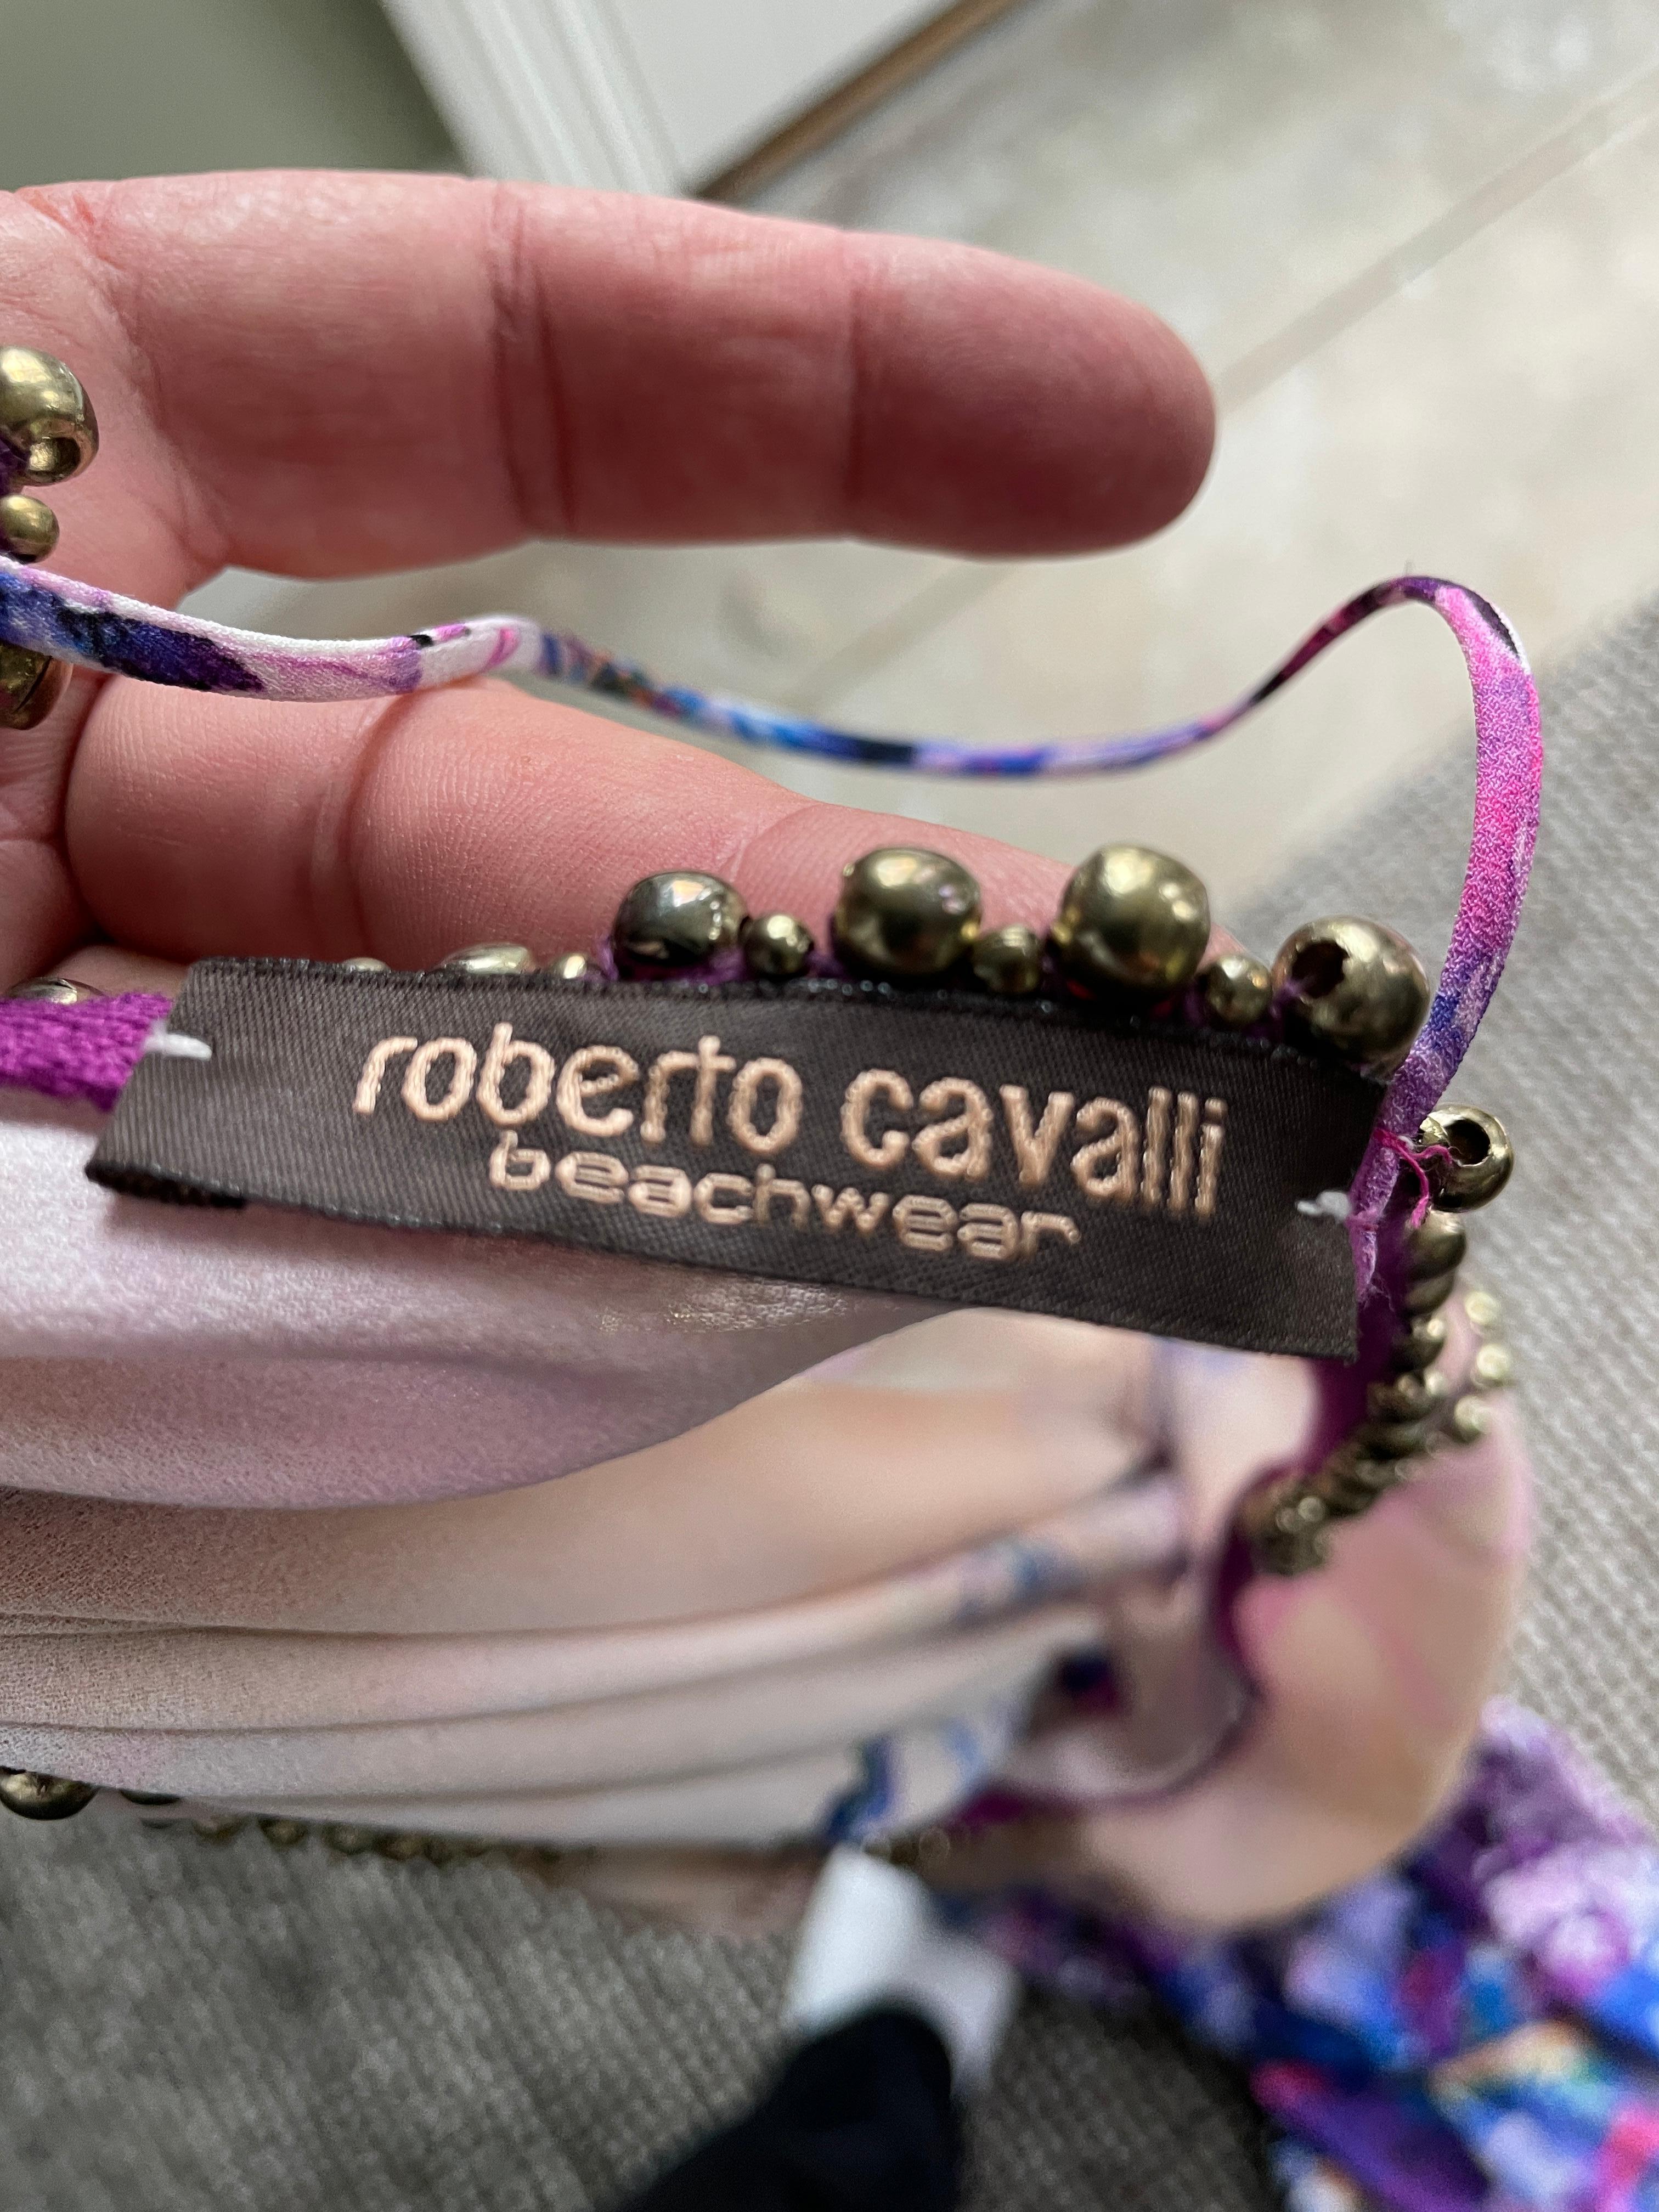 Roberto Cavalli Beachwear Vintage Caftan Dress with Beaded Trim For Sale 5